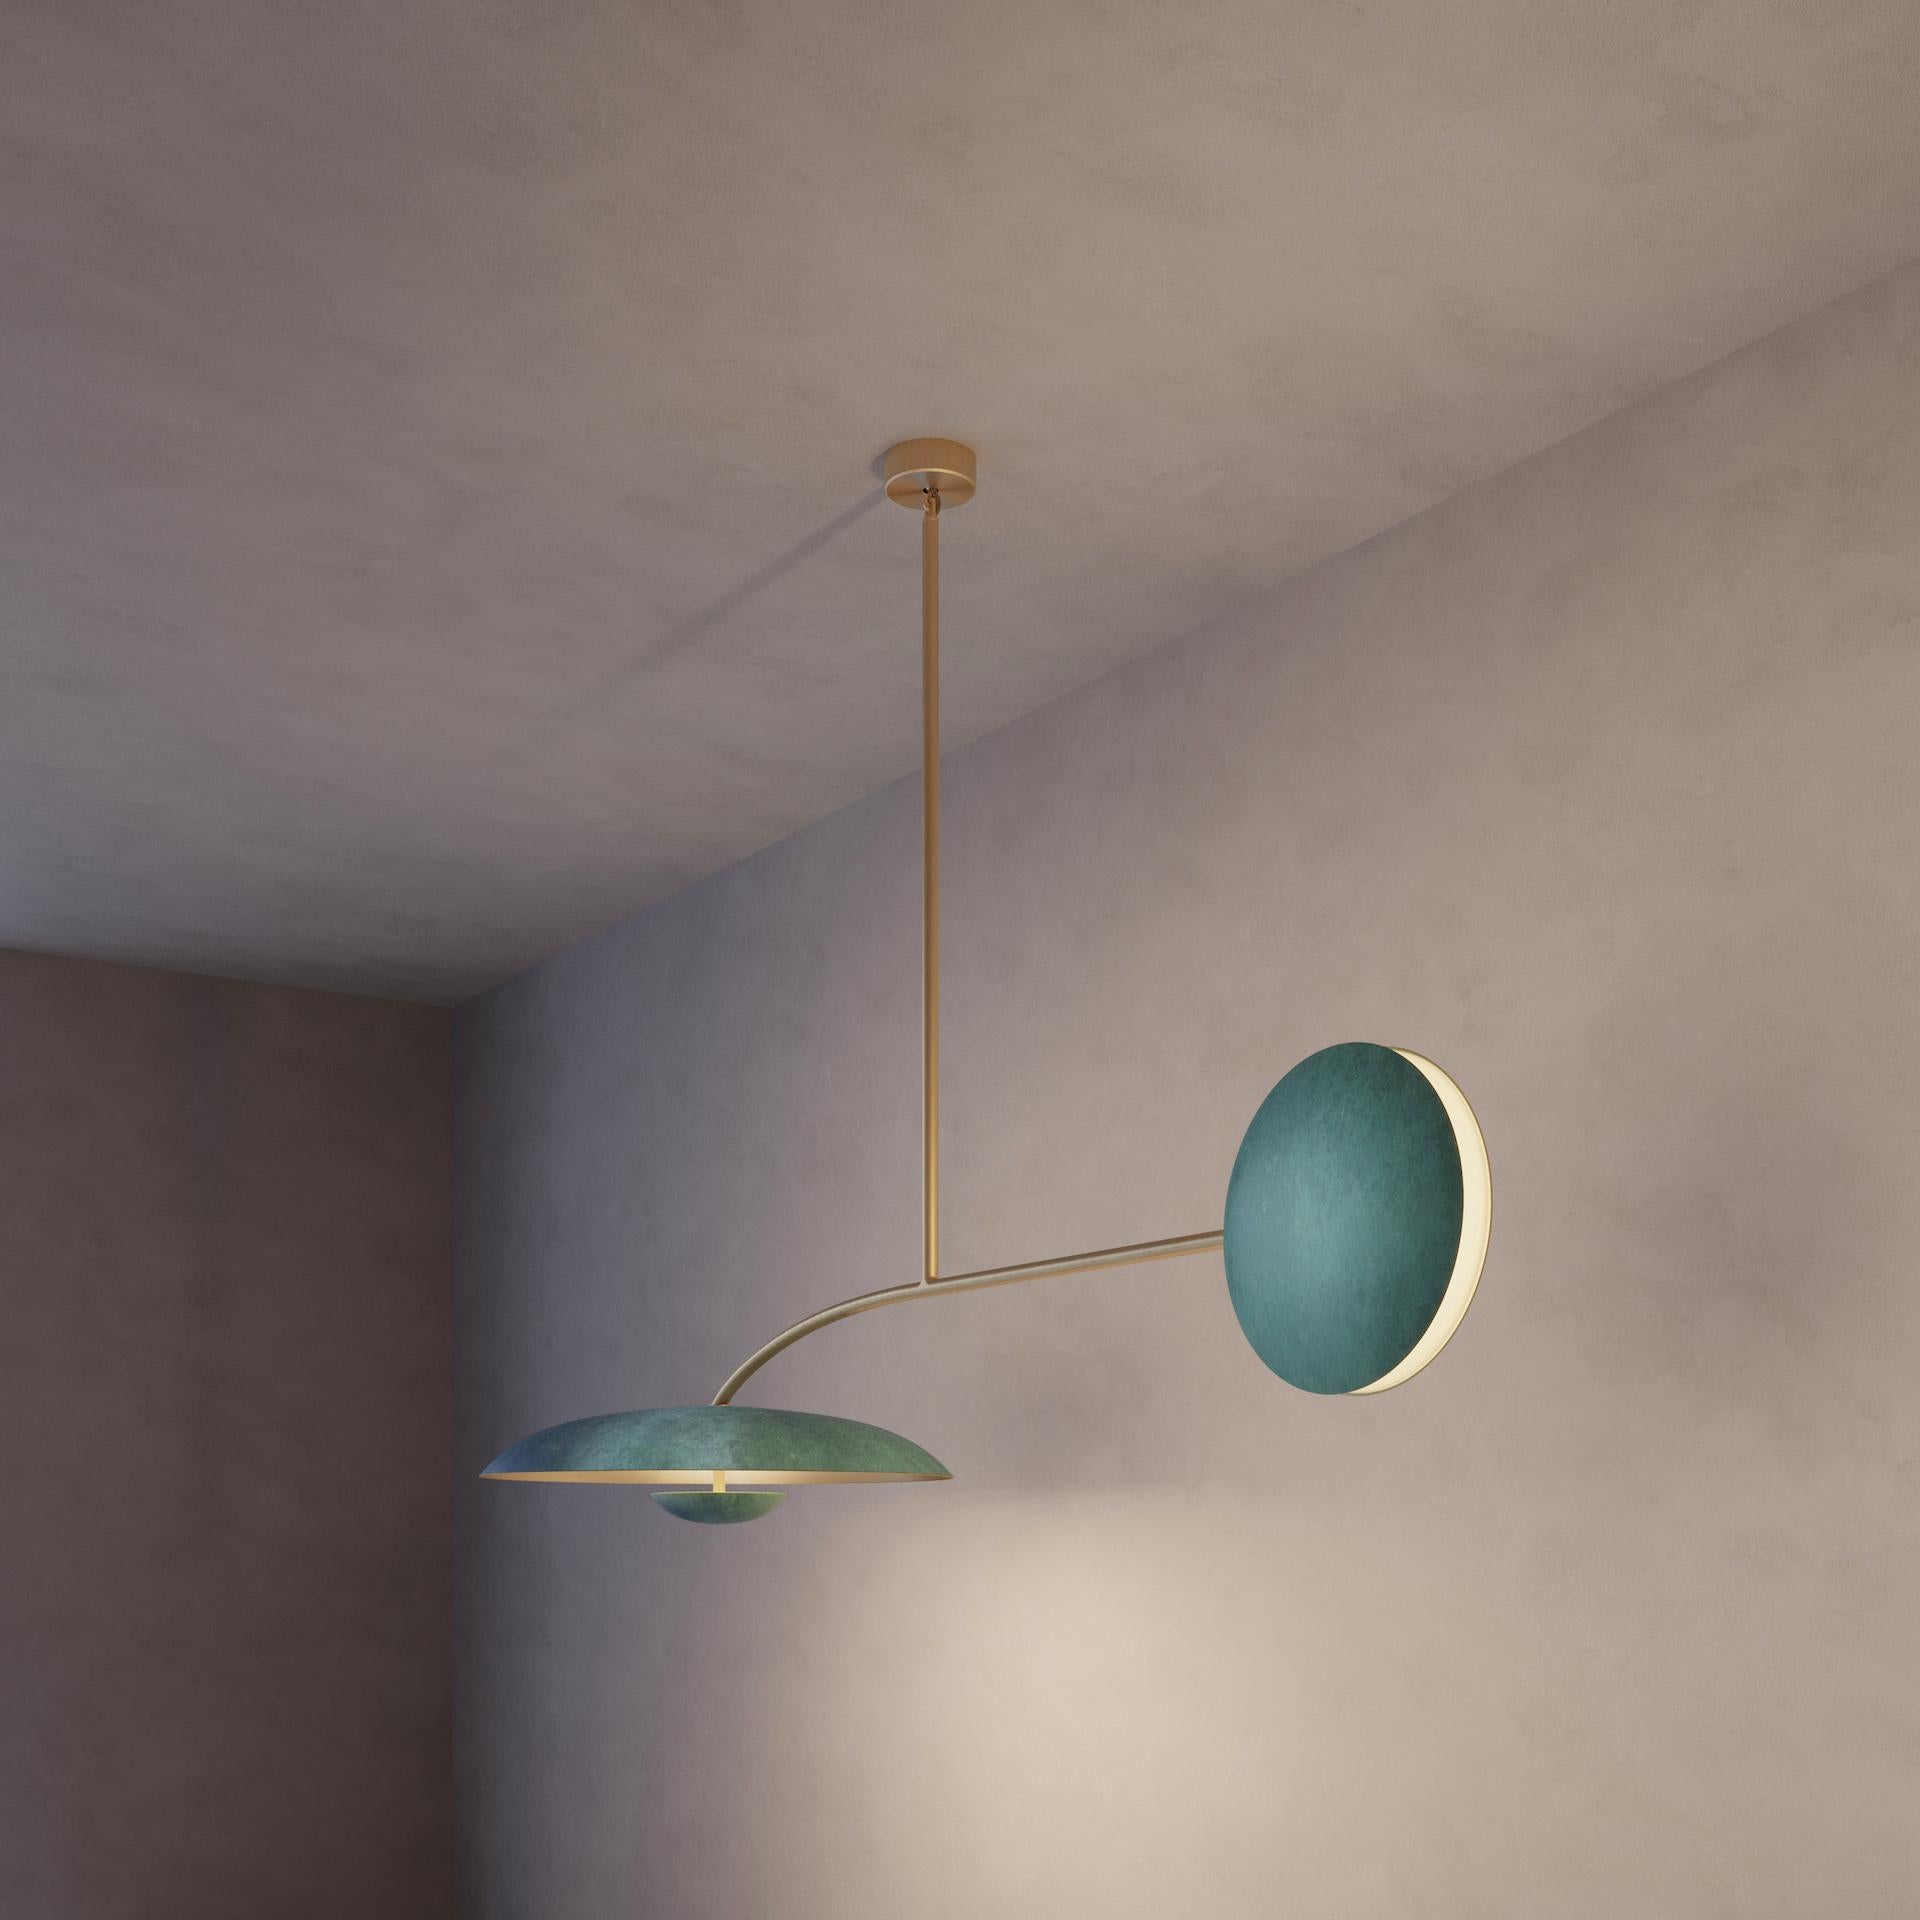 Brass Orbit Solo Verdigris Ceiling Light by Atelier001